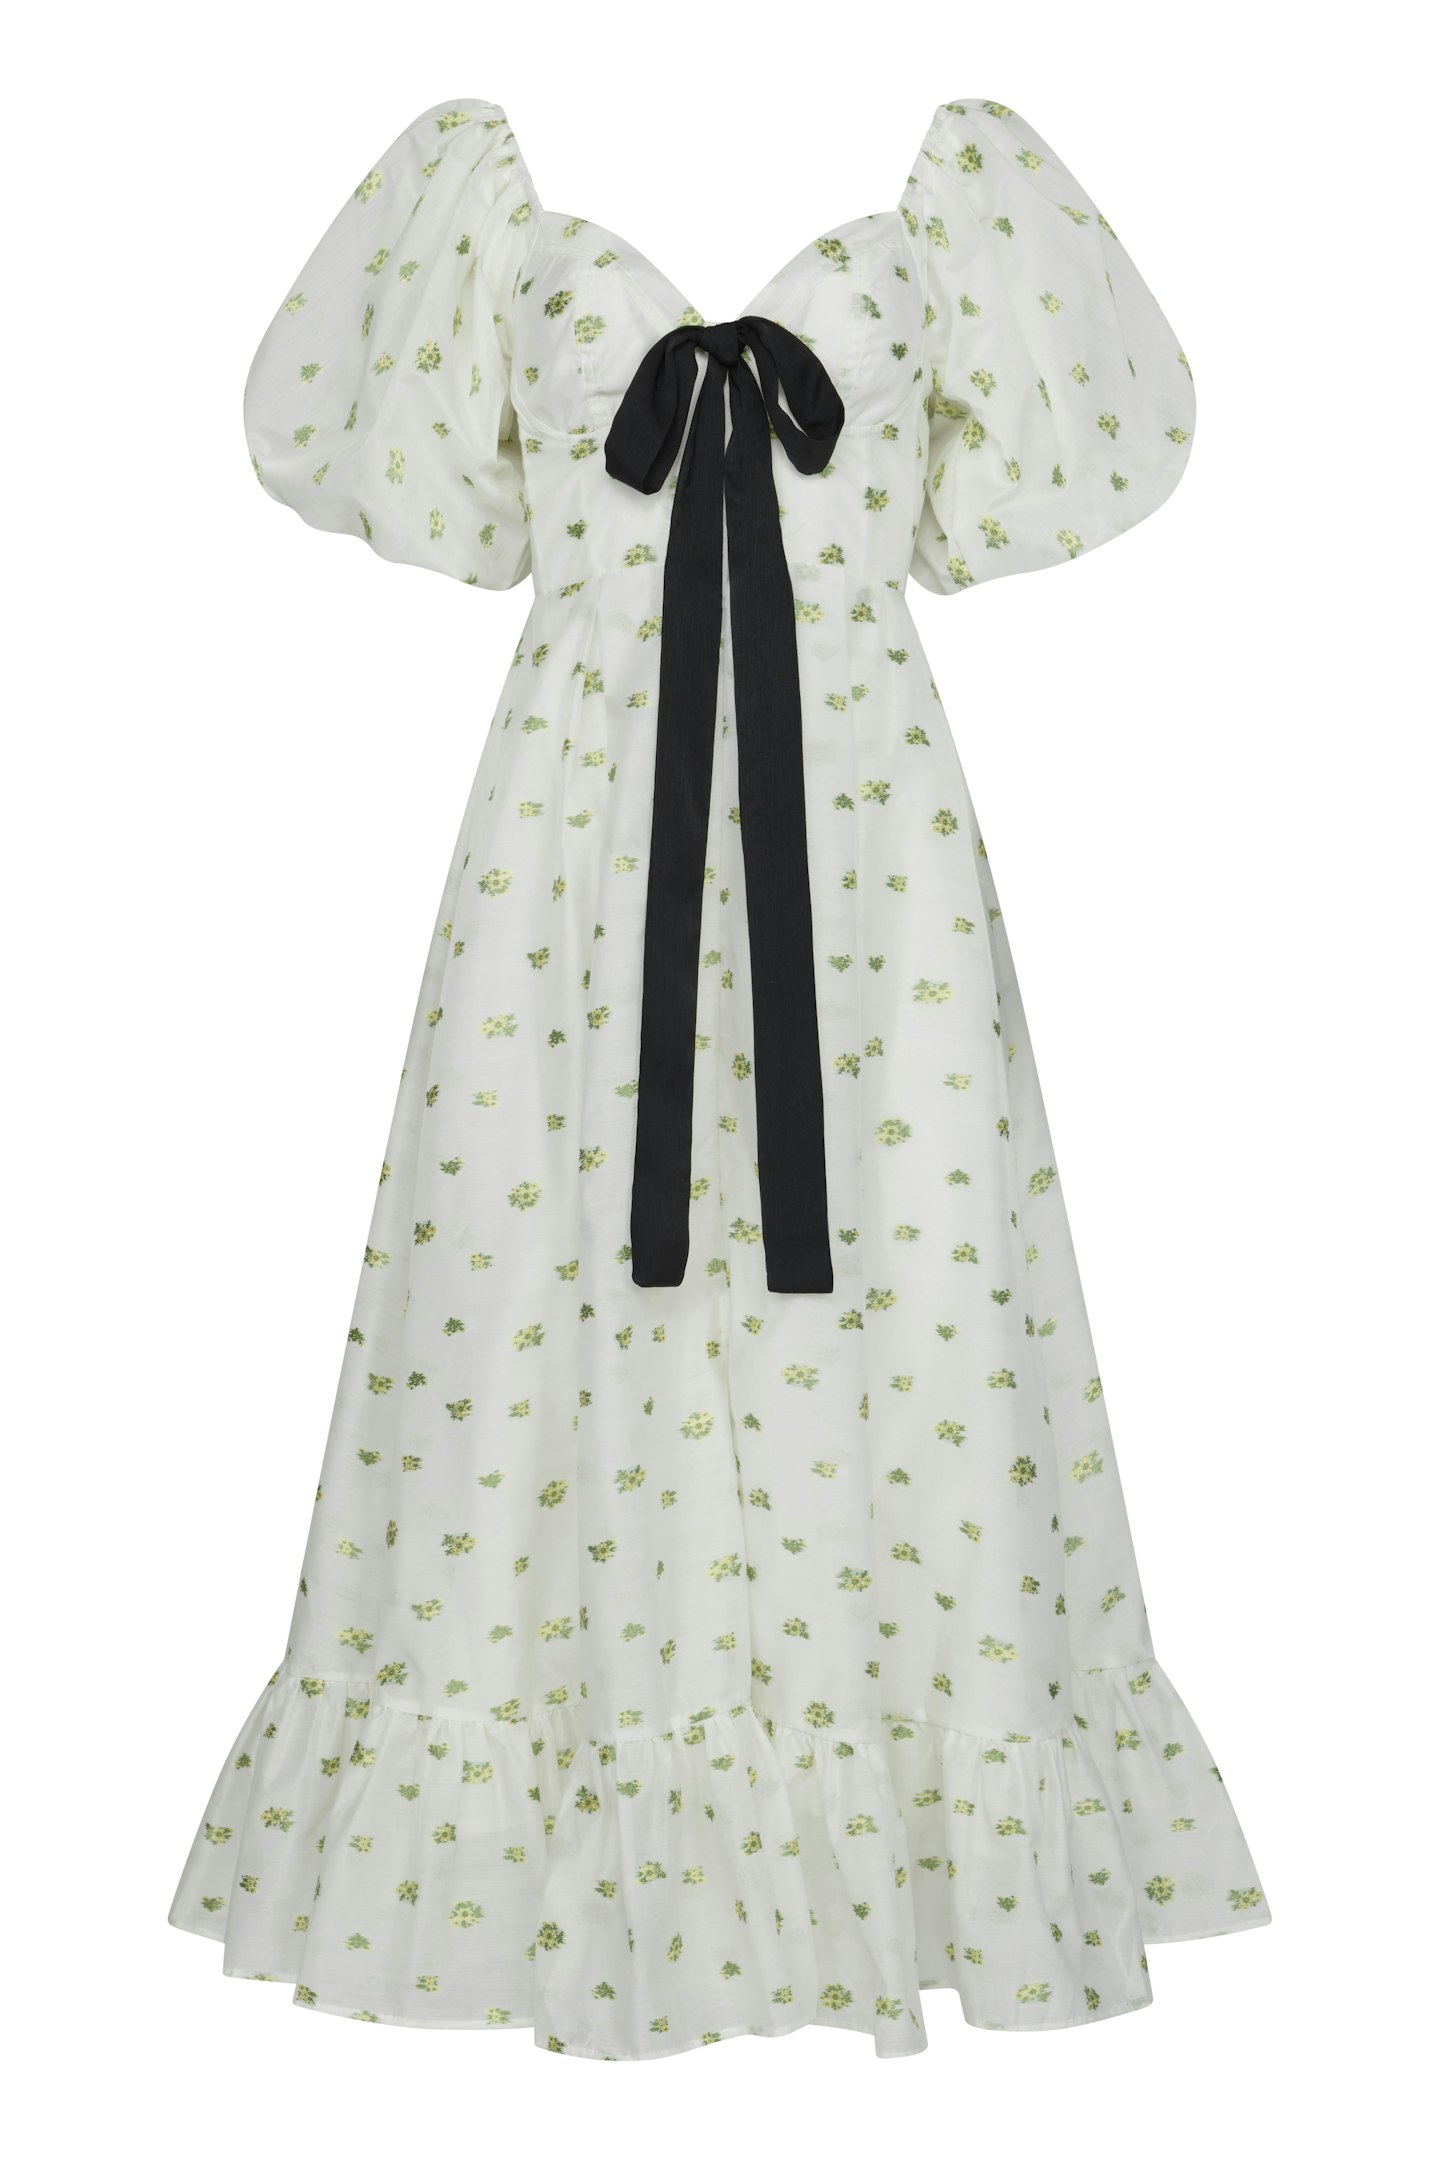 Sister Jane, Dream Angelica Jacquard Maxi Dress, £185